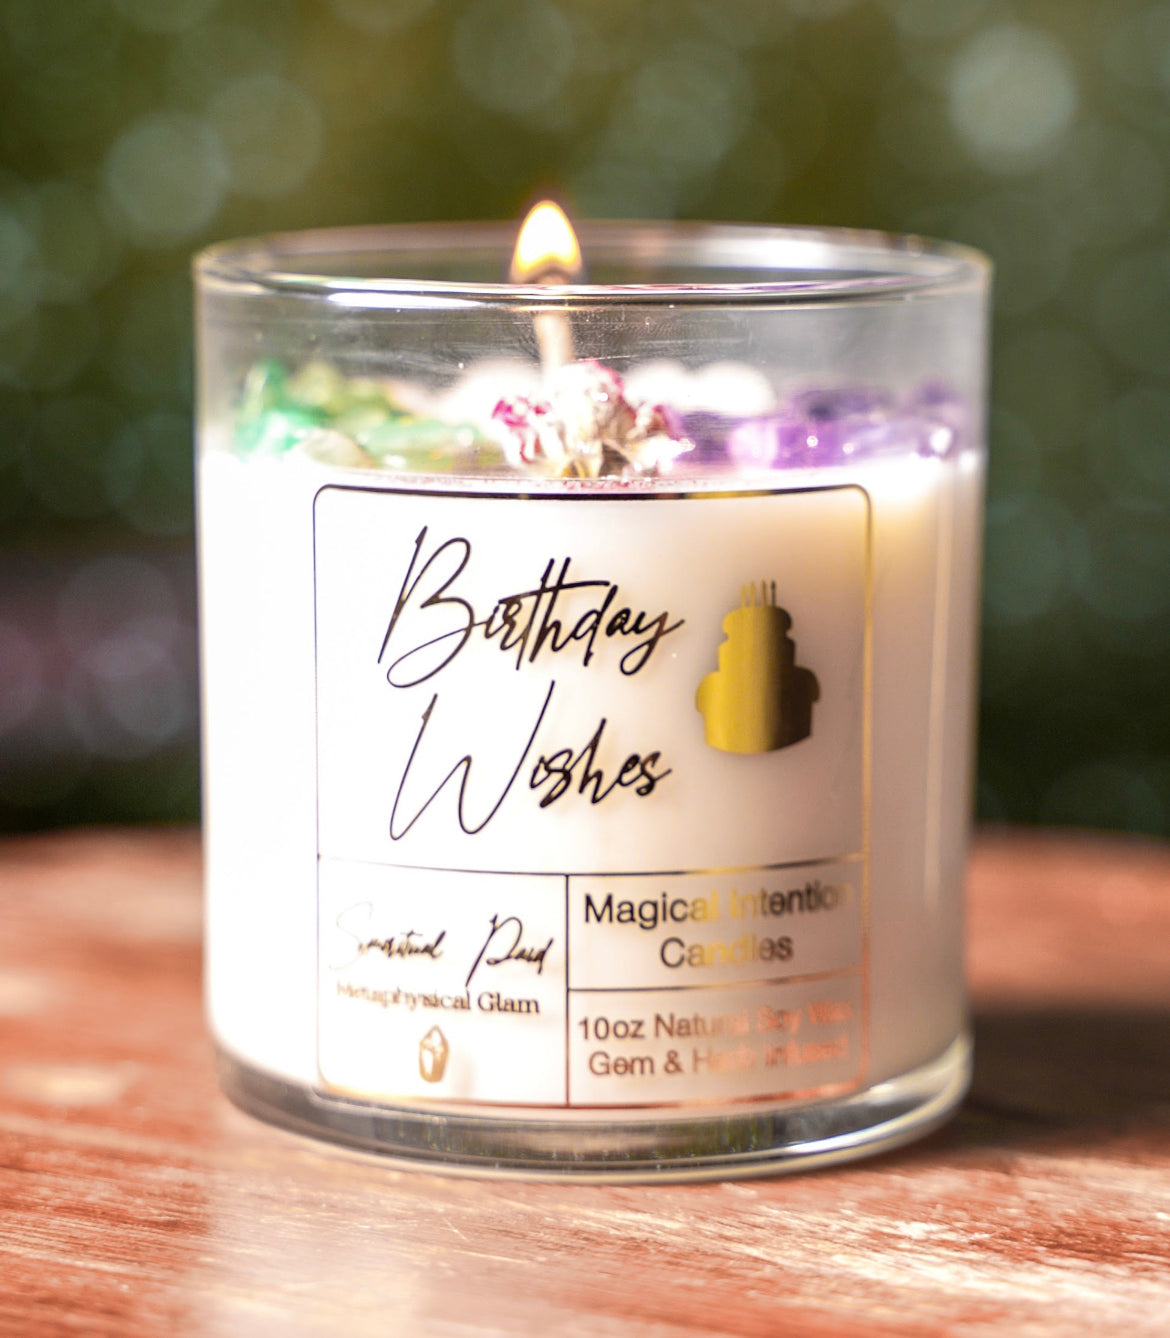 Birthday Wishes - Manifest your birthday dreams